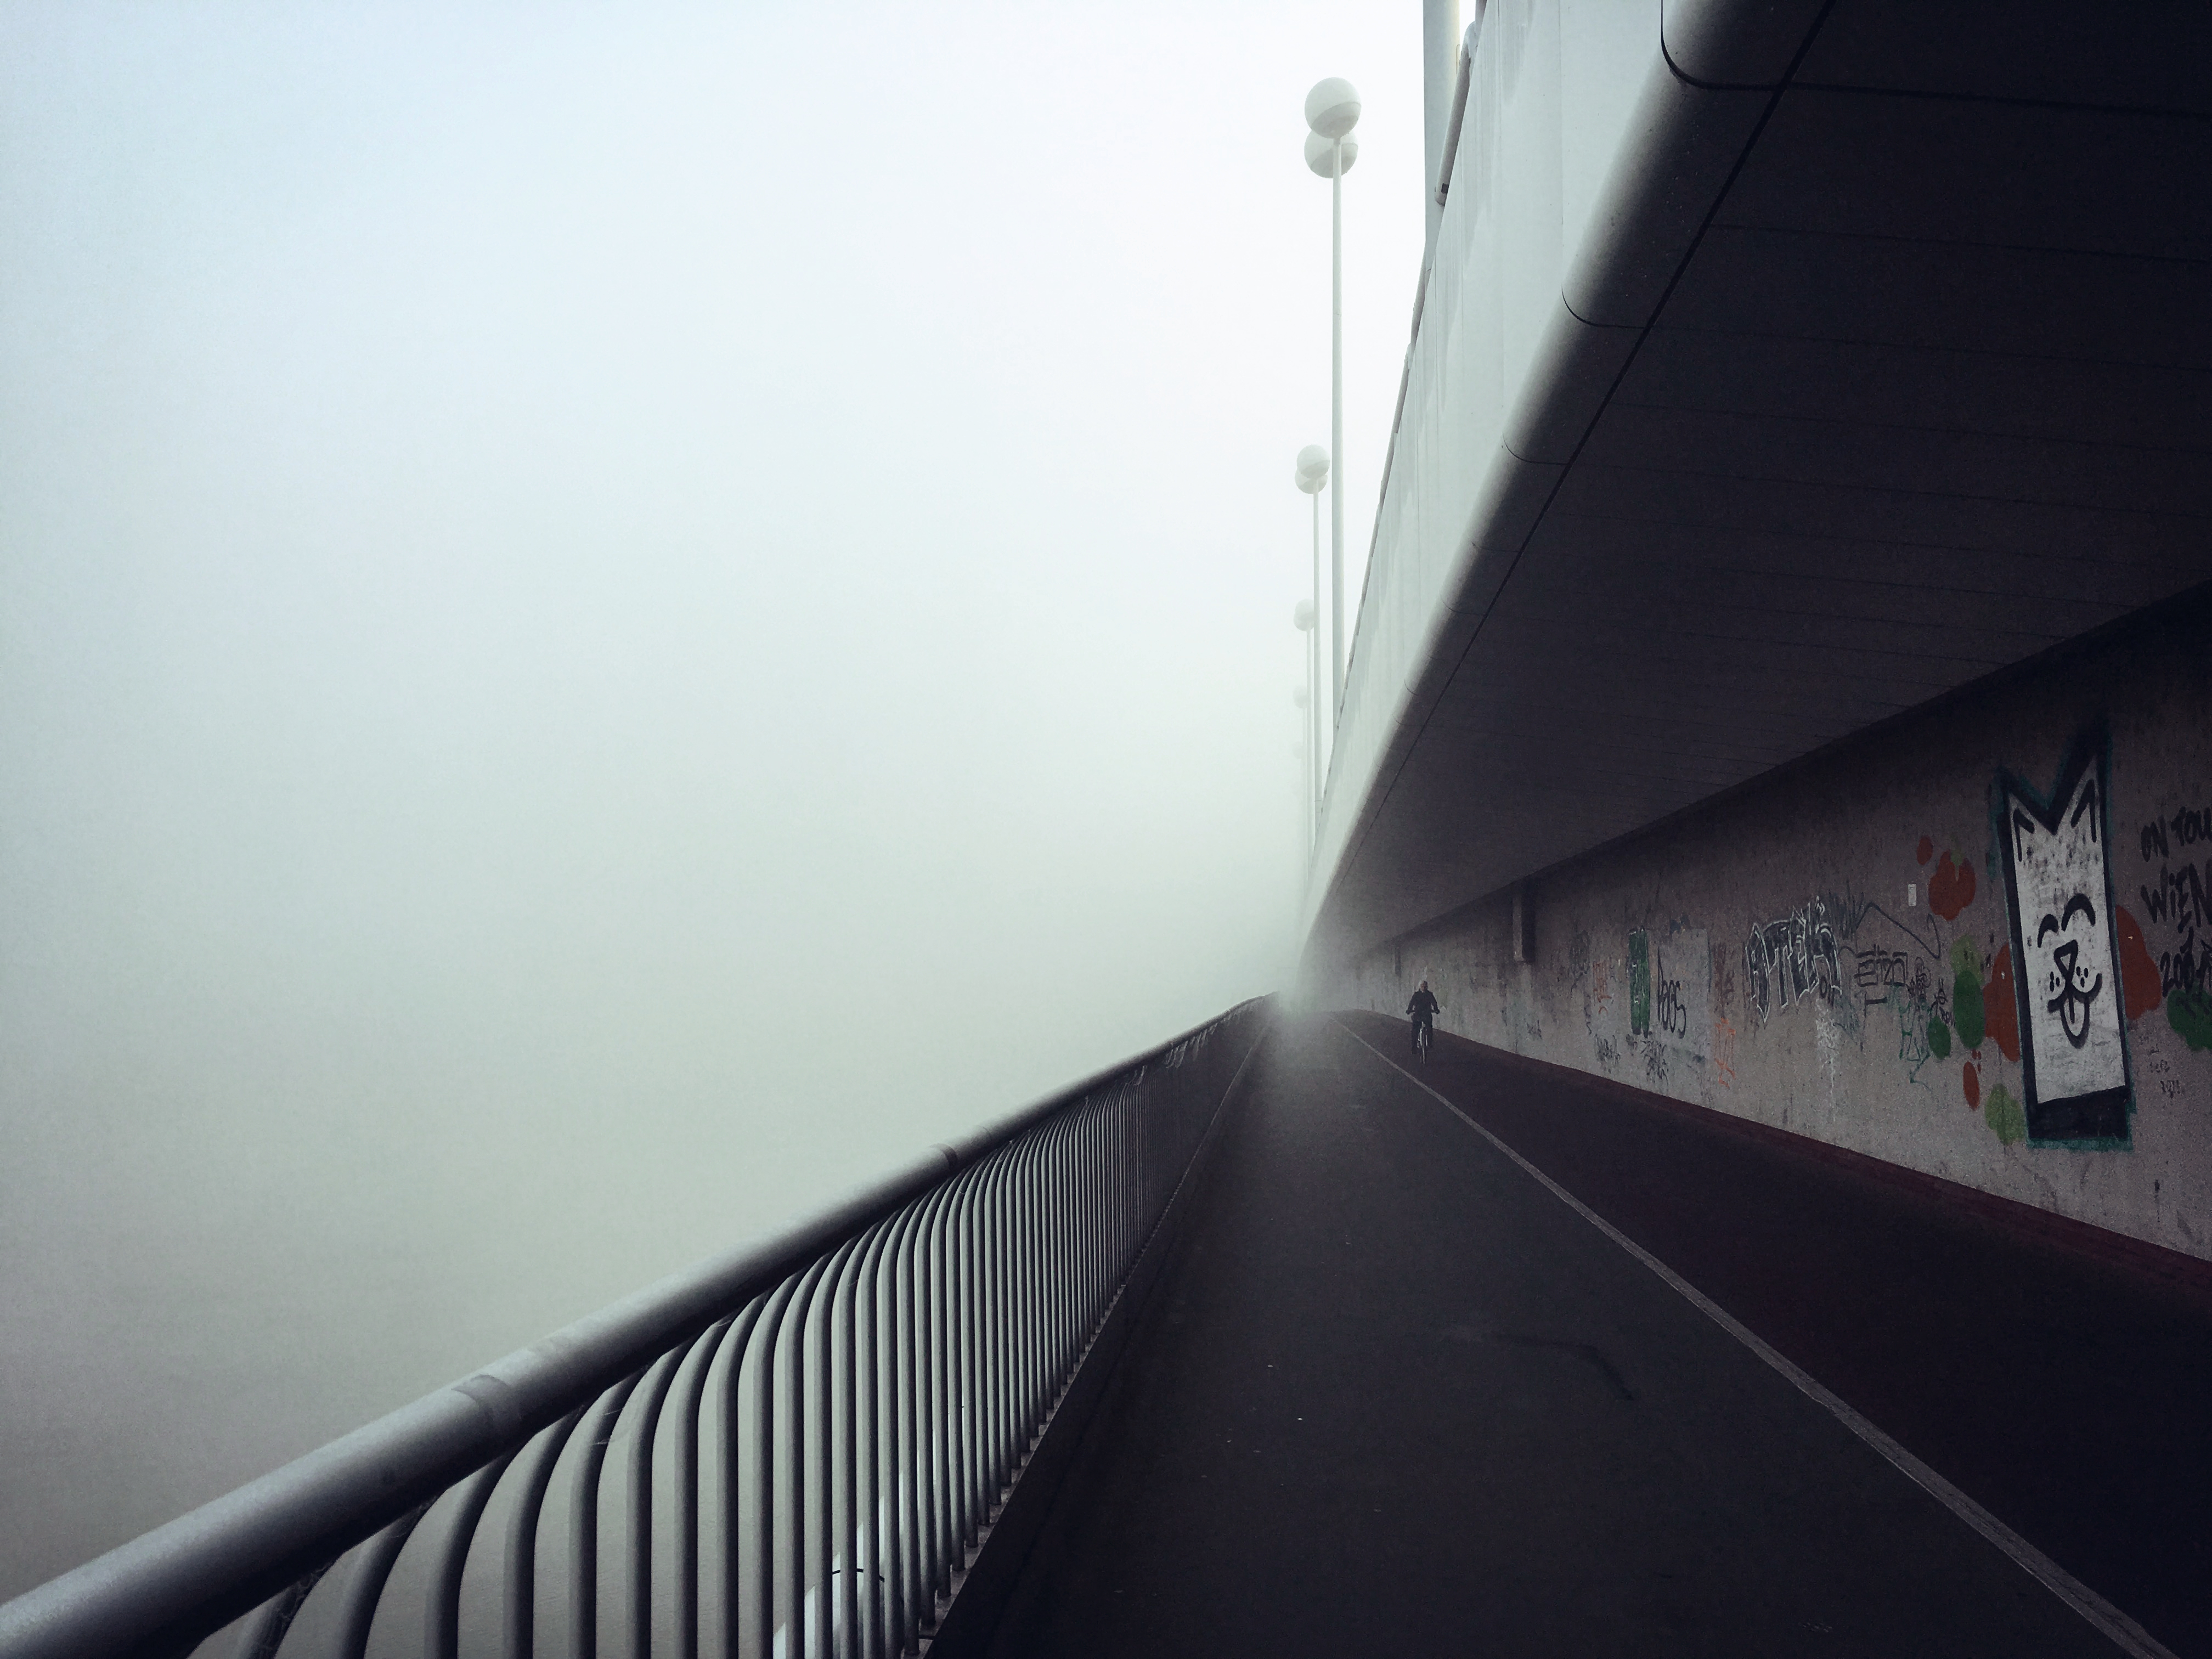 A bridge in Vienna, fogg surrounds everything